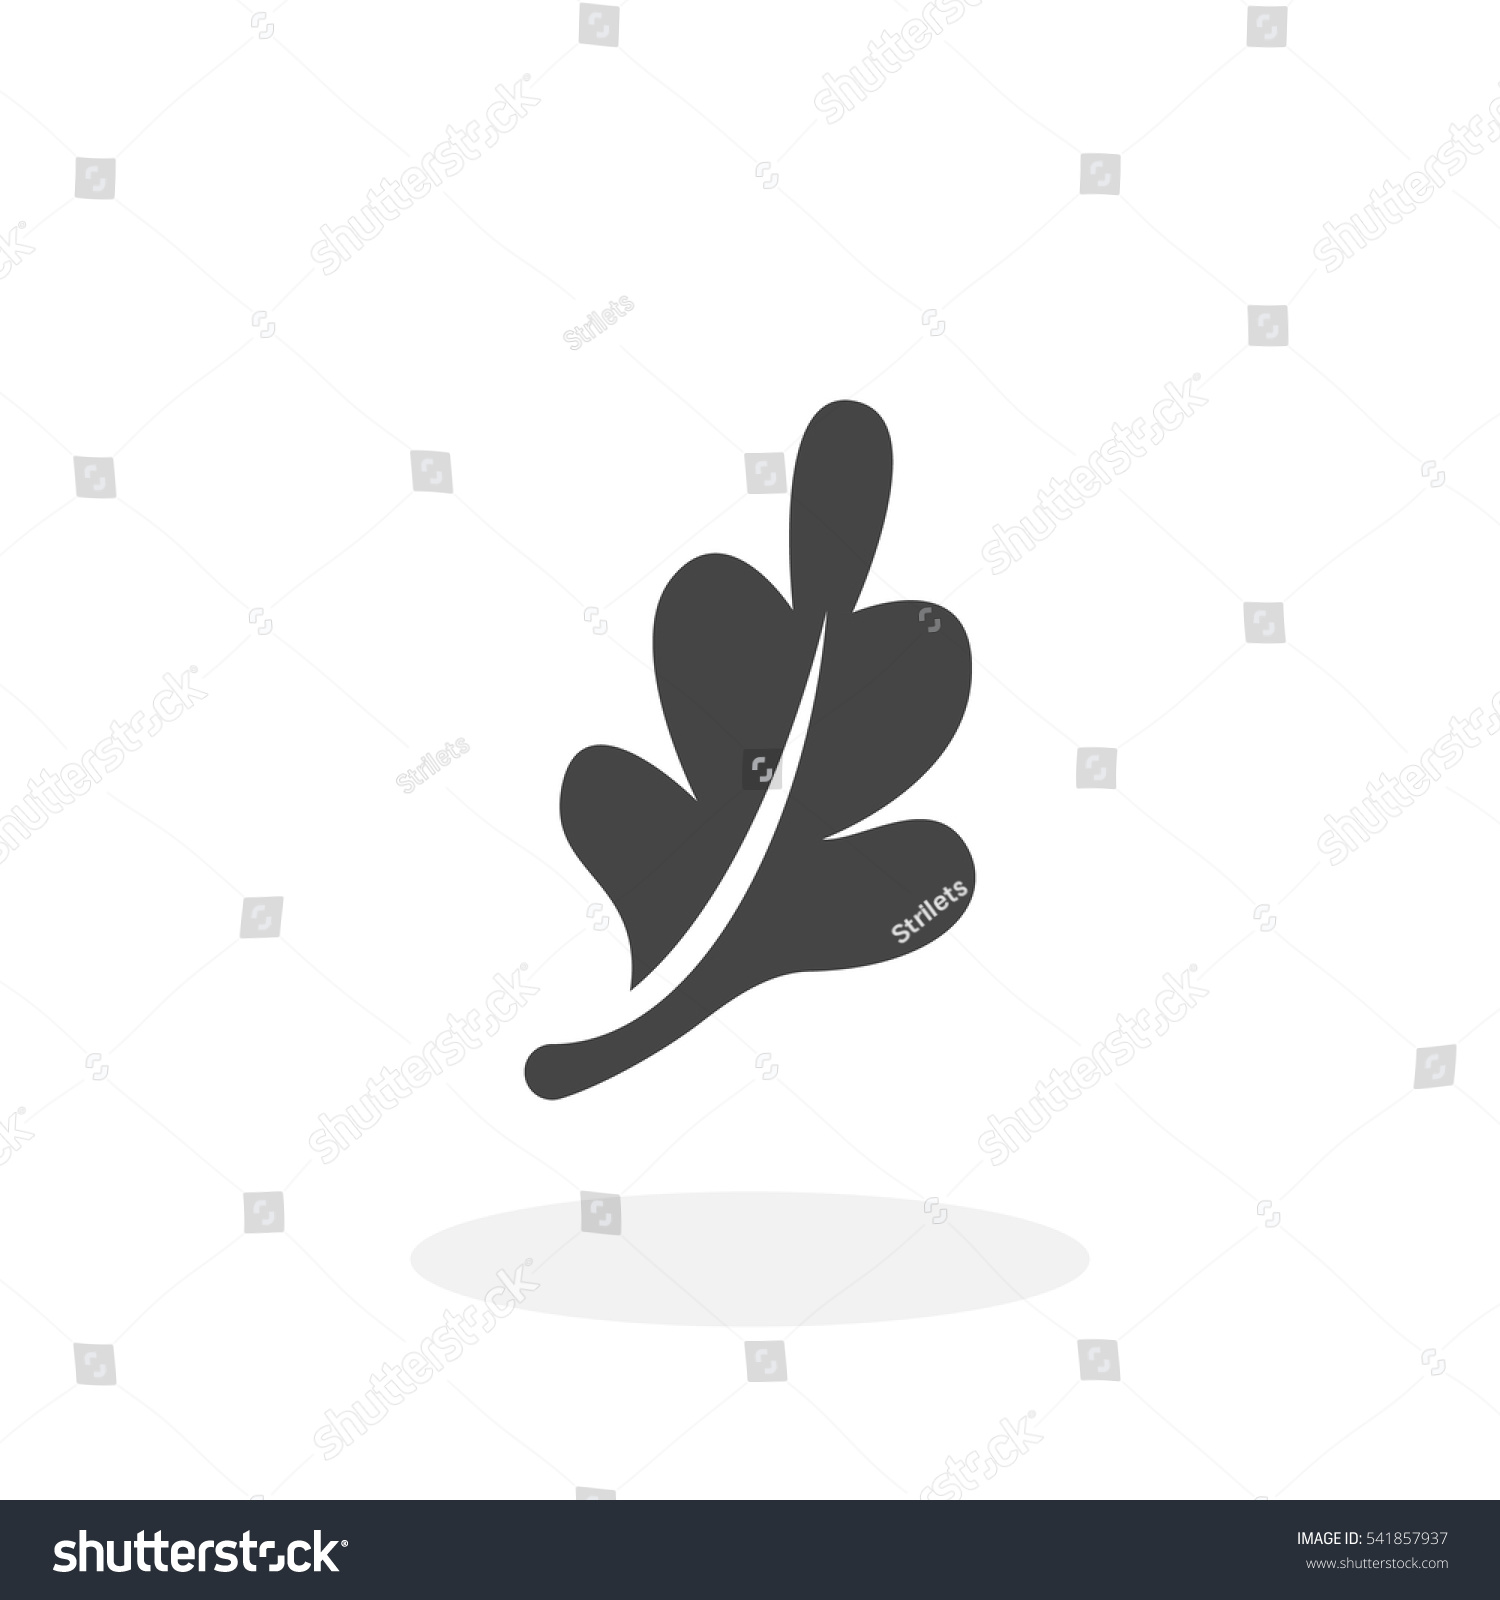 SVG of Oak Leaf icon isolated on white background. Oak Leaf vector logo. Flat design style. Modern vector pictogram for web graphics - stock vector svg